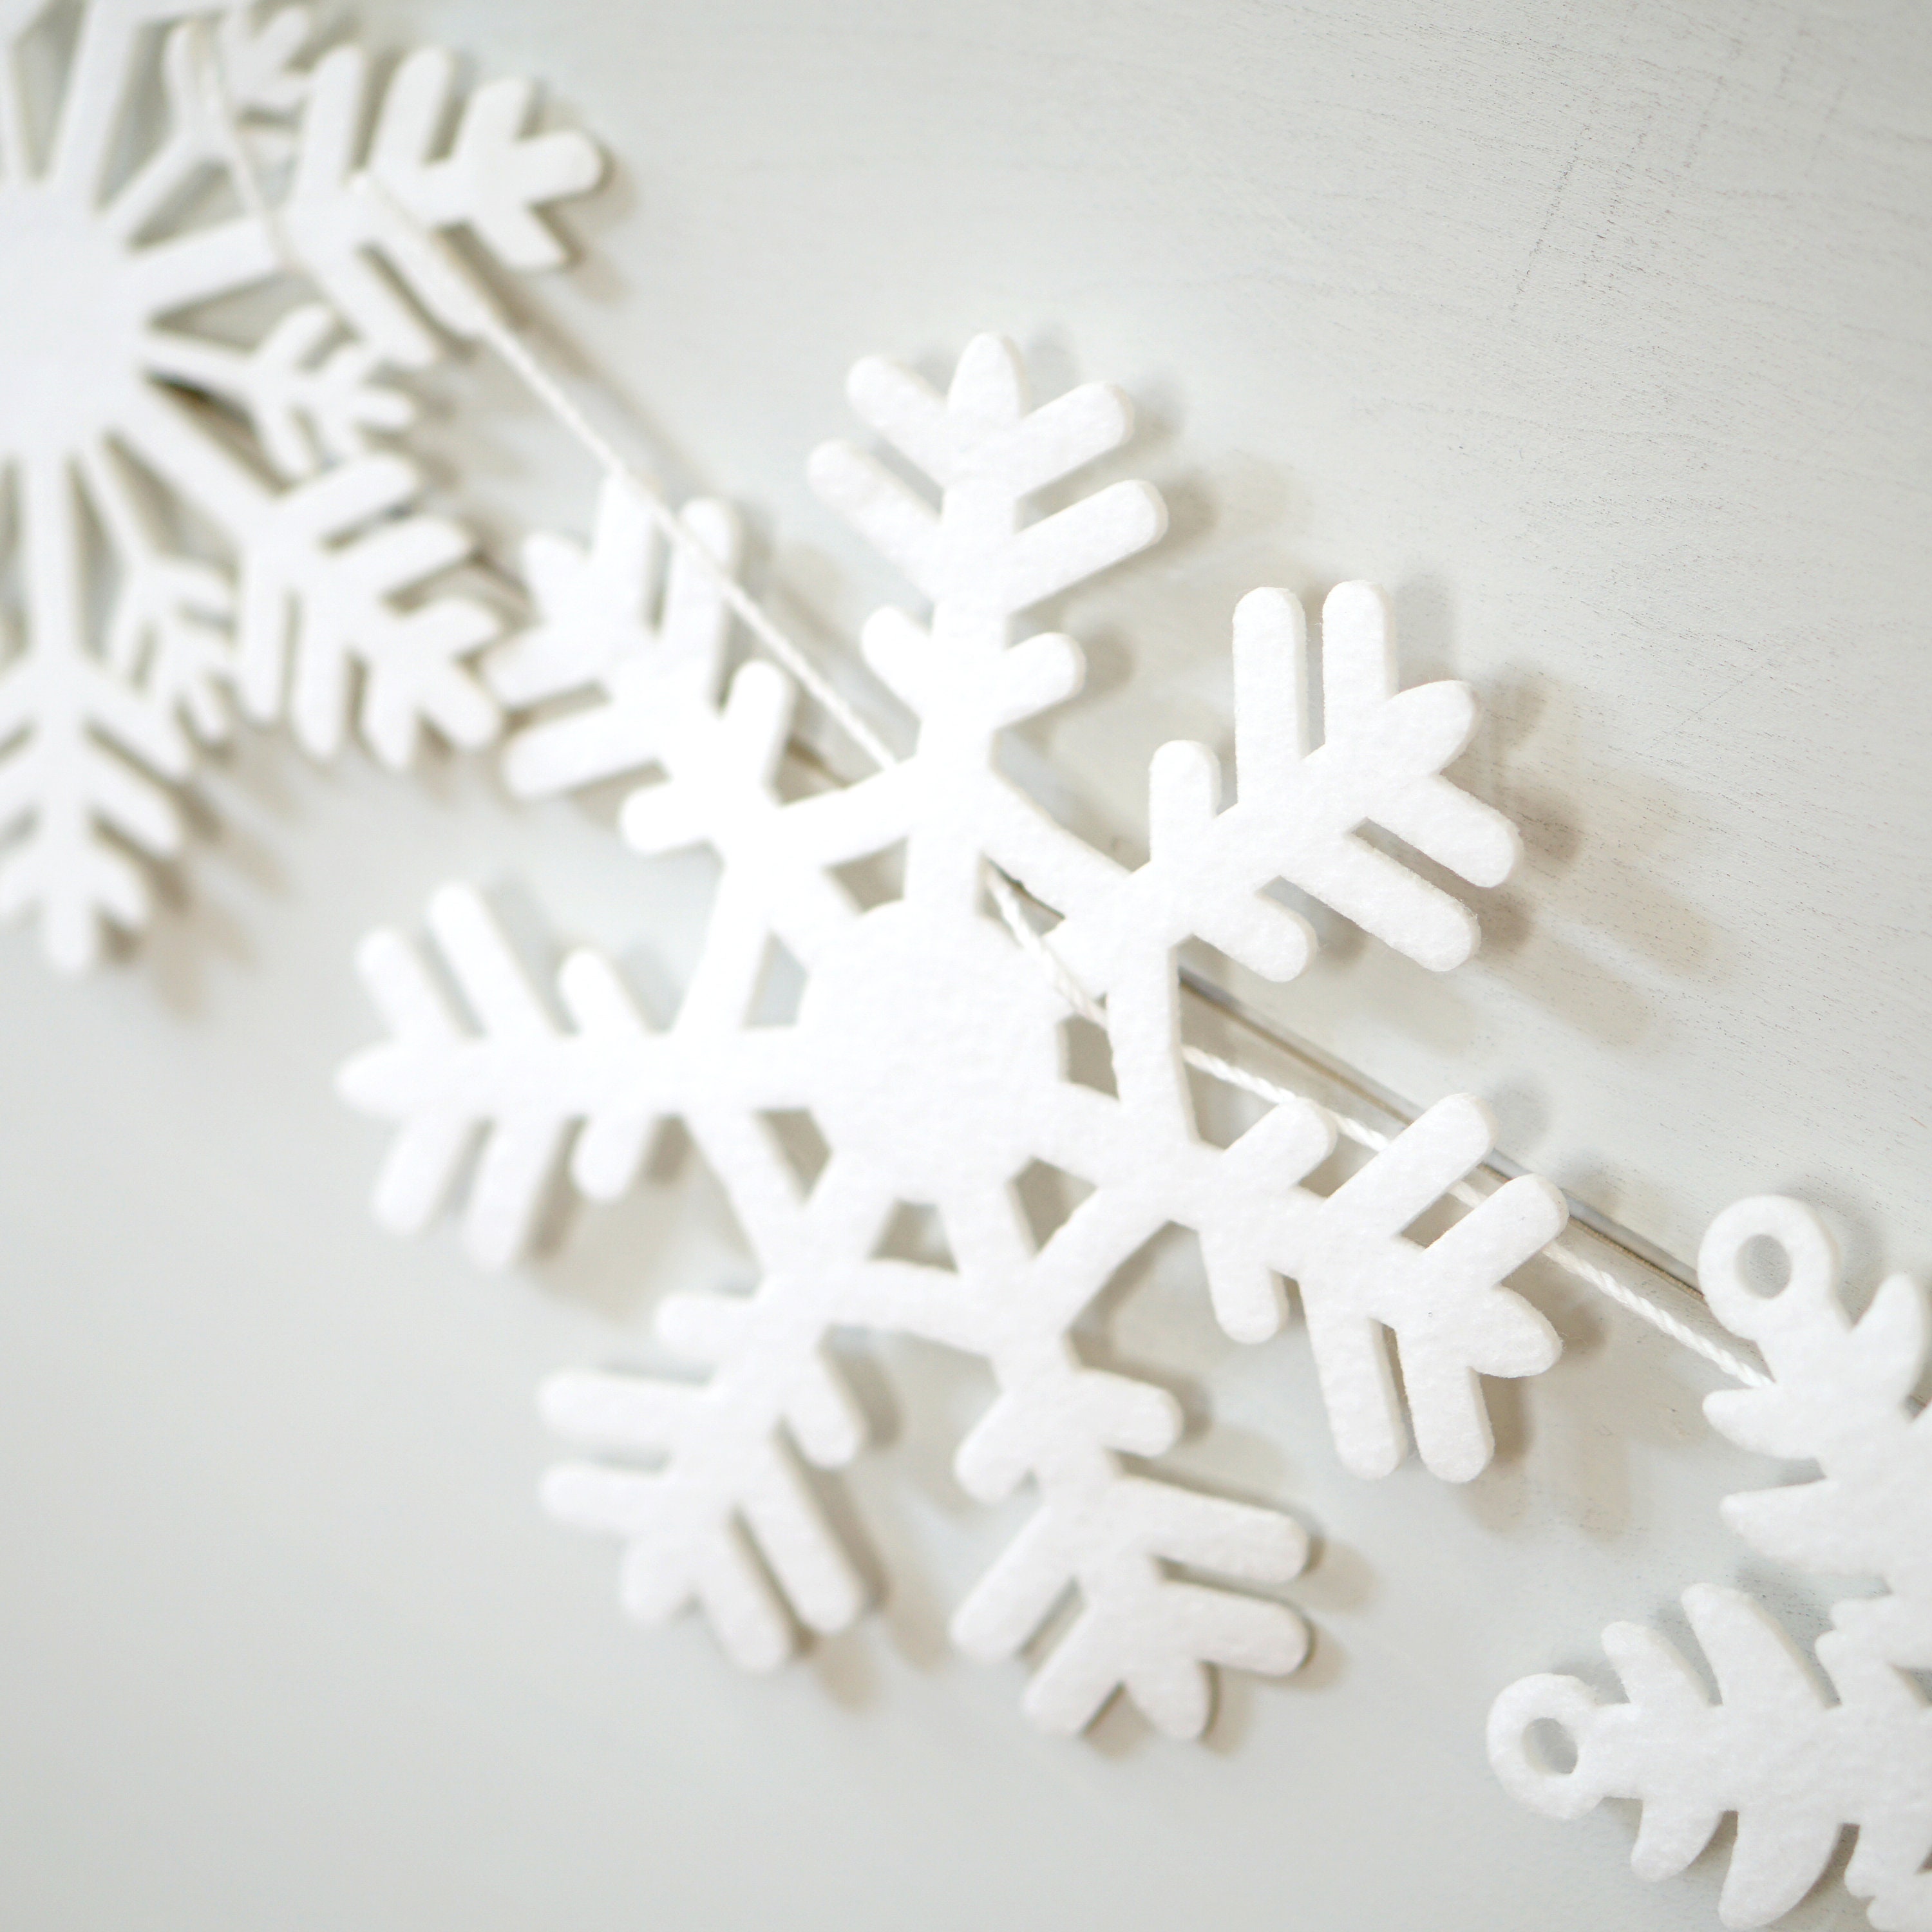 Multipack of 6 - Medium Felt Snowflakes 1.25 36/Pkg-Winter